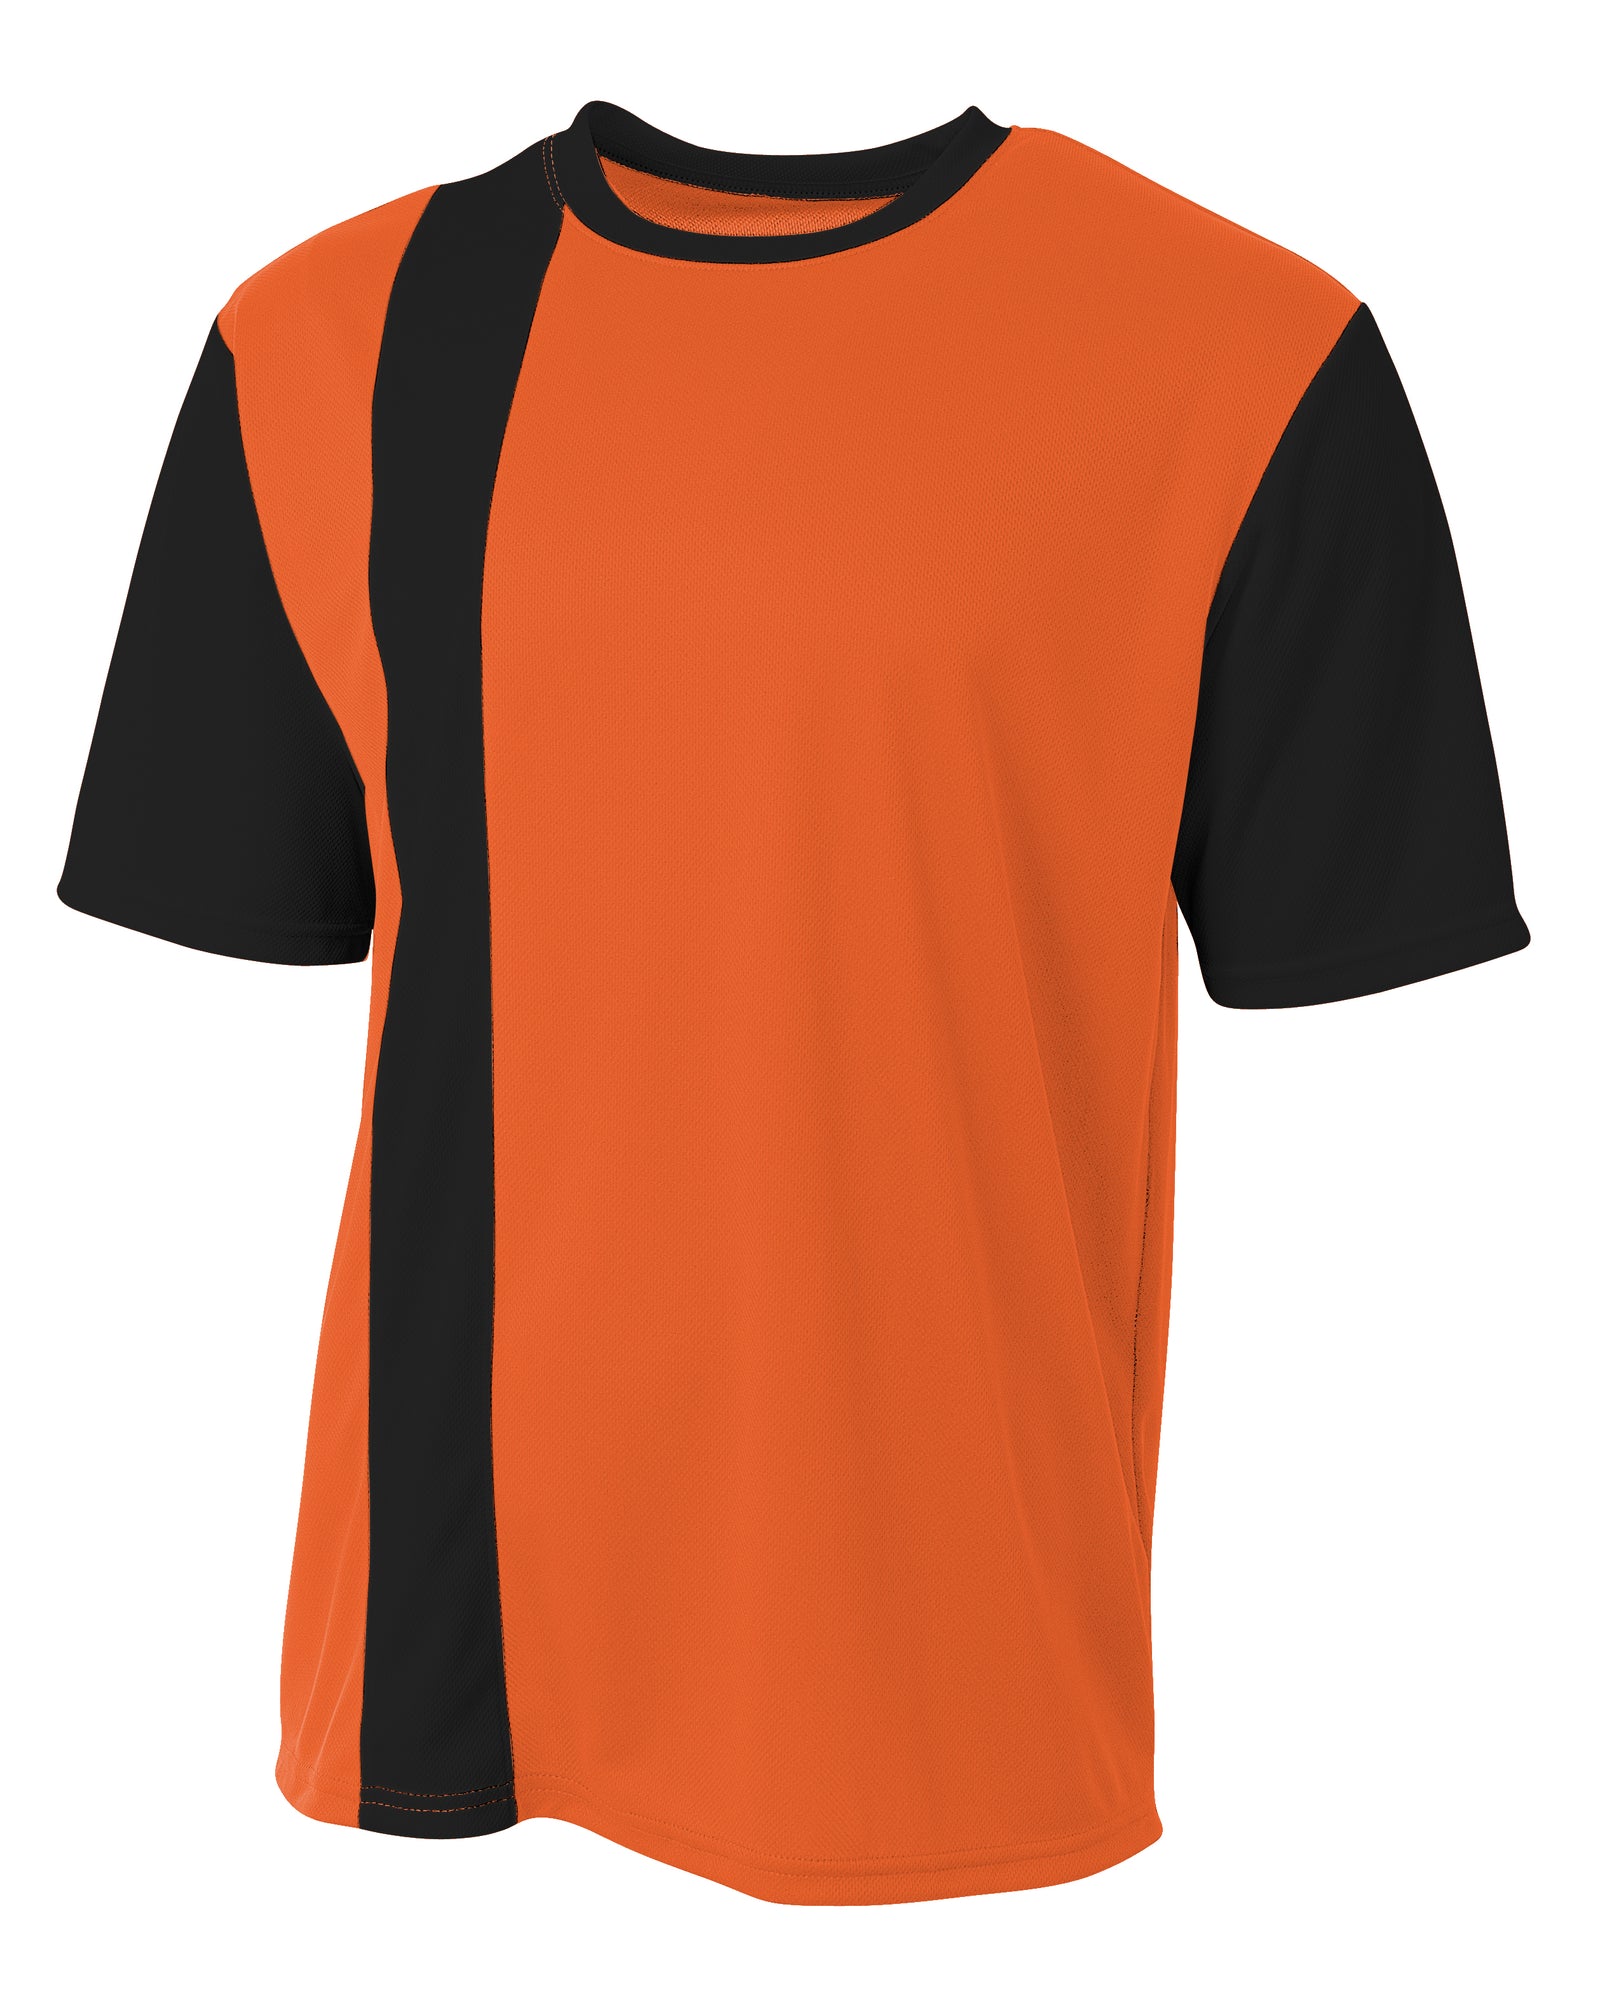 Orange/black A4 A4 Legend Soccer Jersey